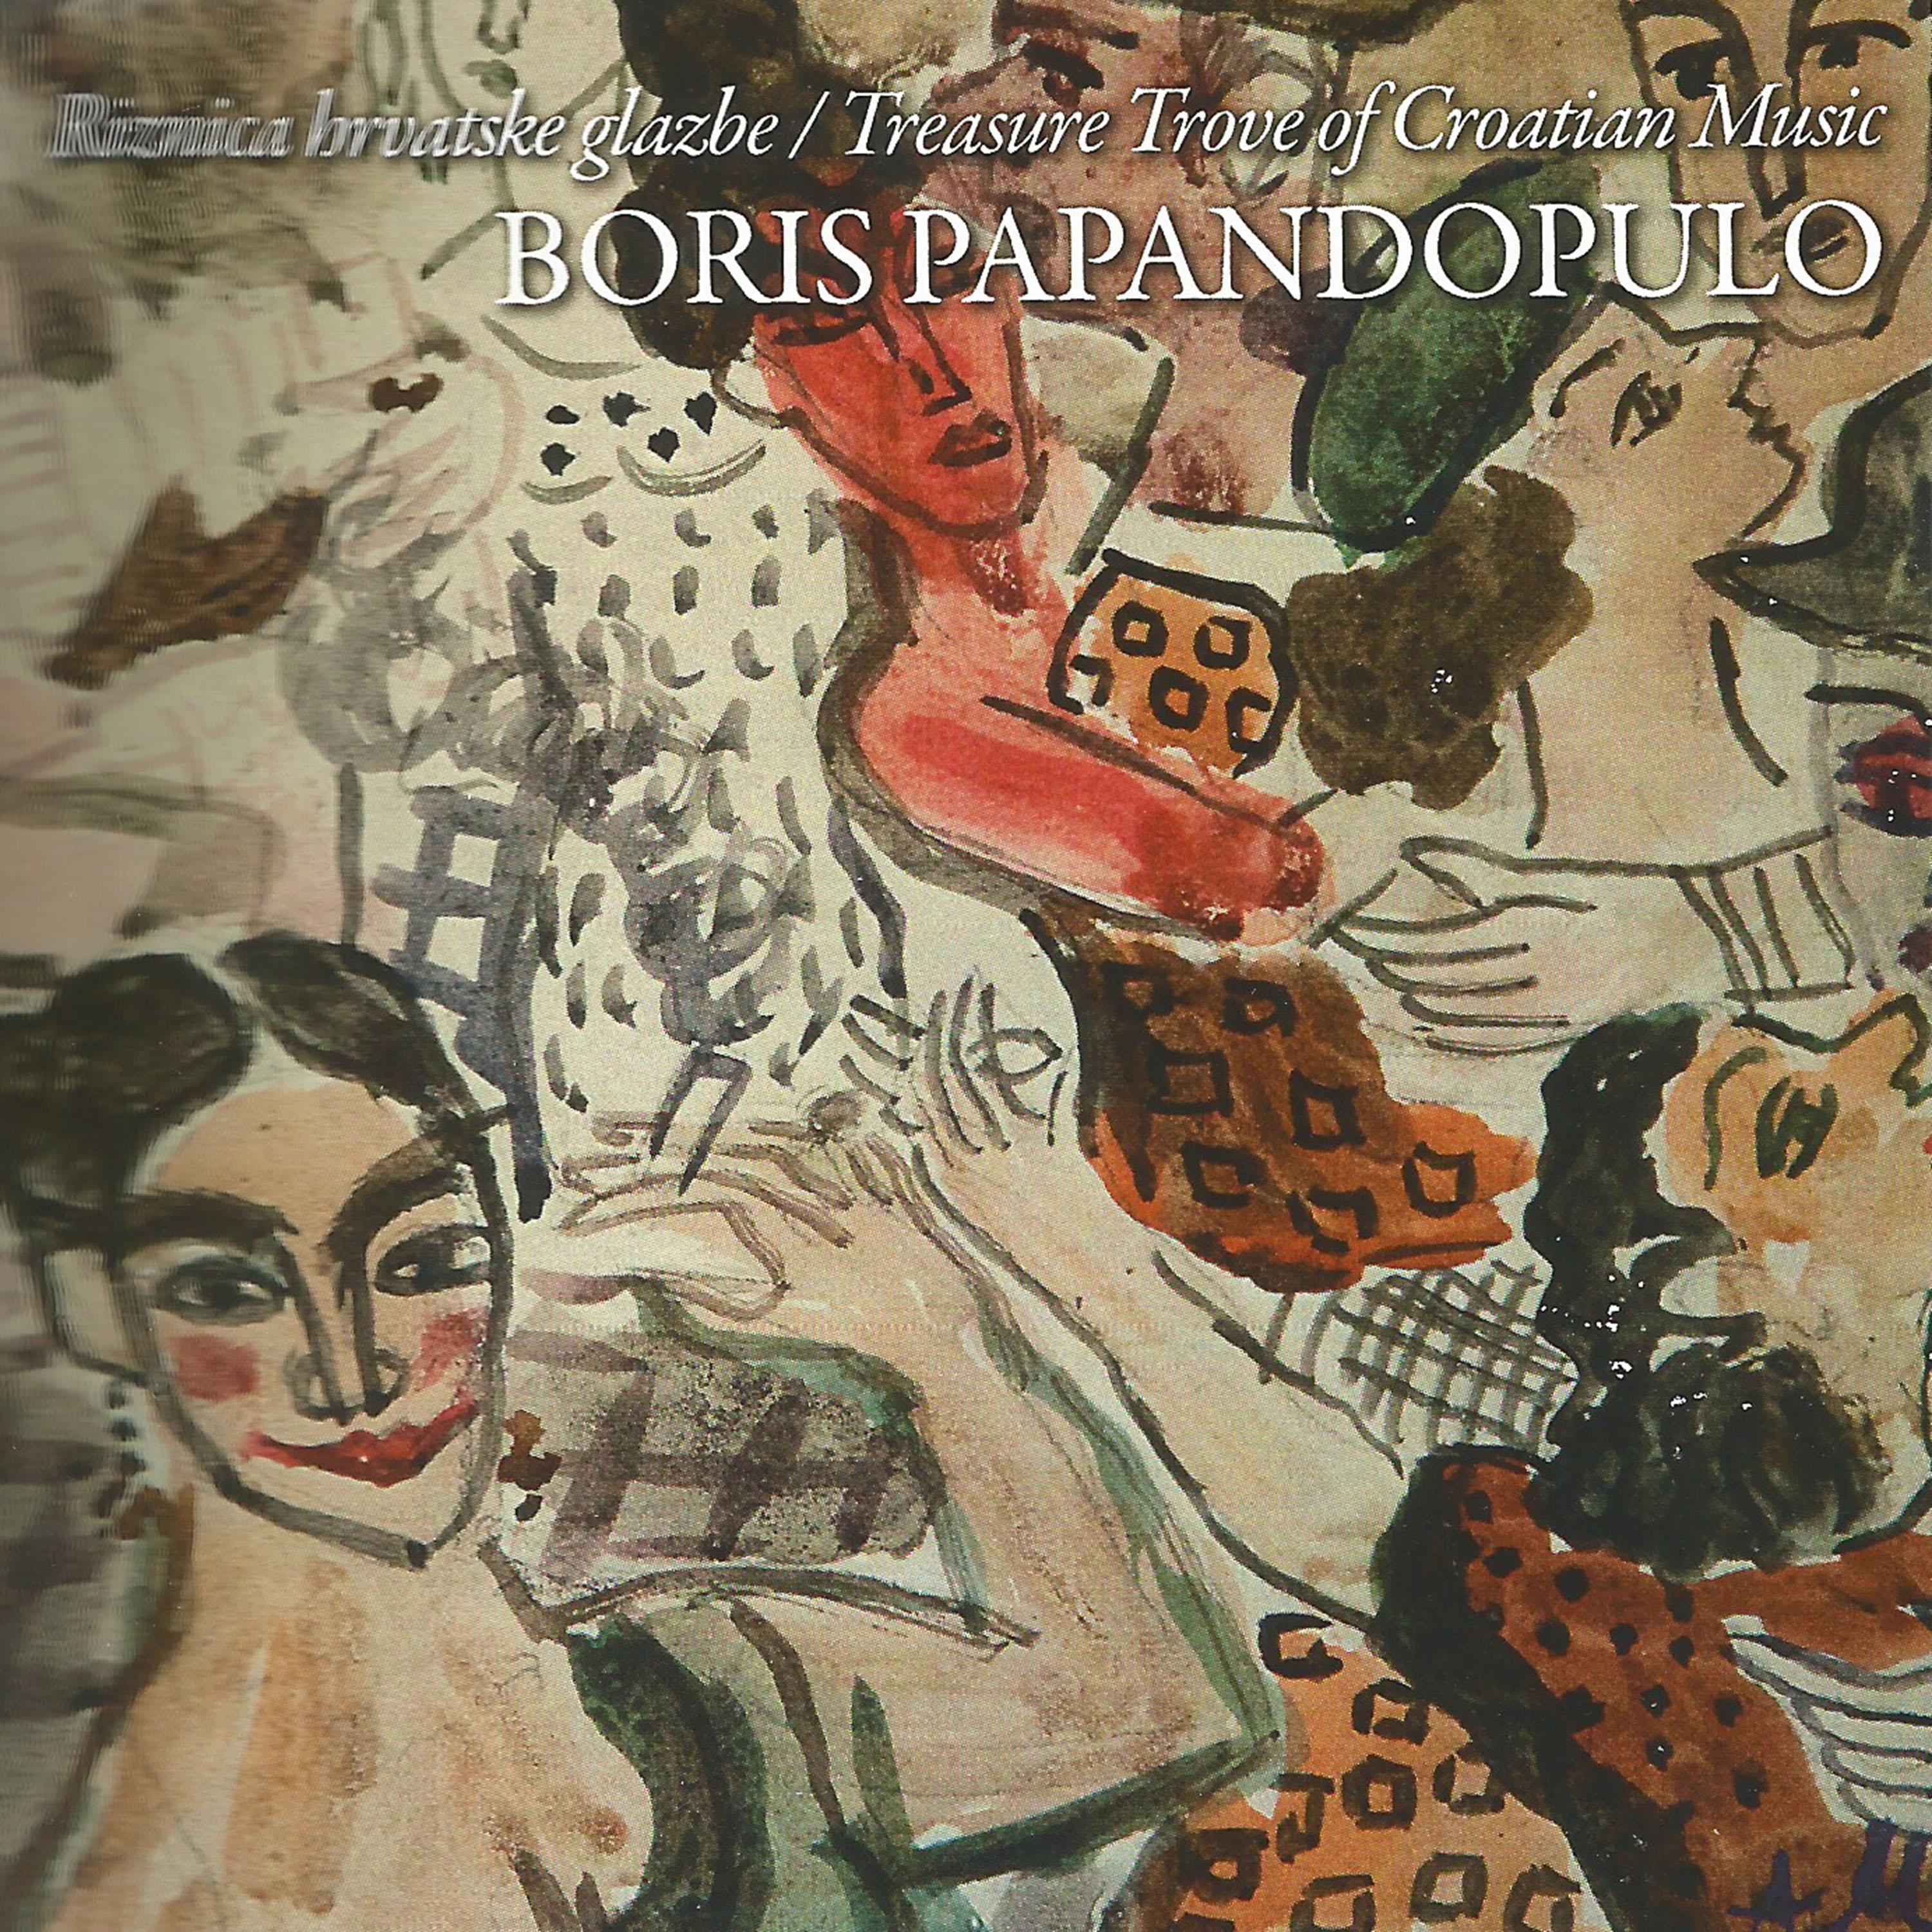 Boris Papandopulo - Concerto for violin and orchestra, op. 125: Andante sostenuto, molto cantabile